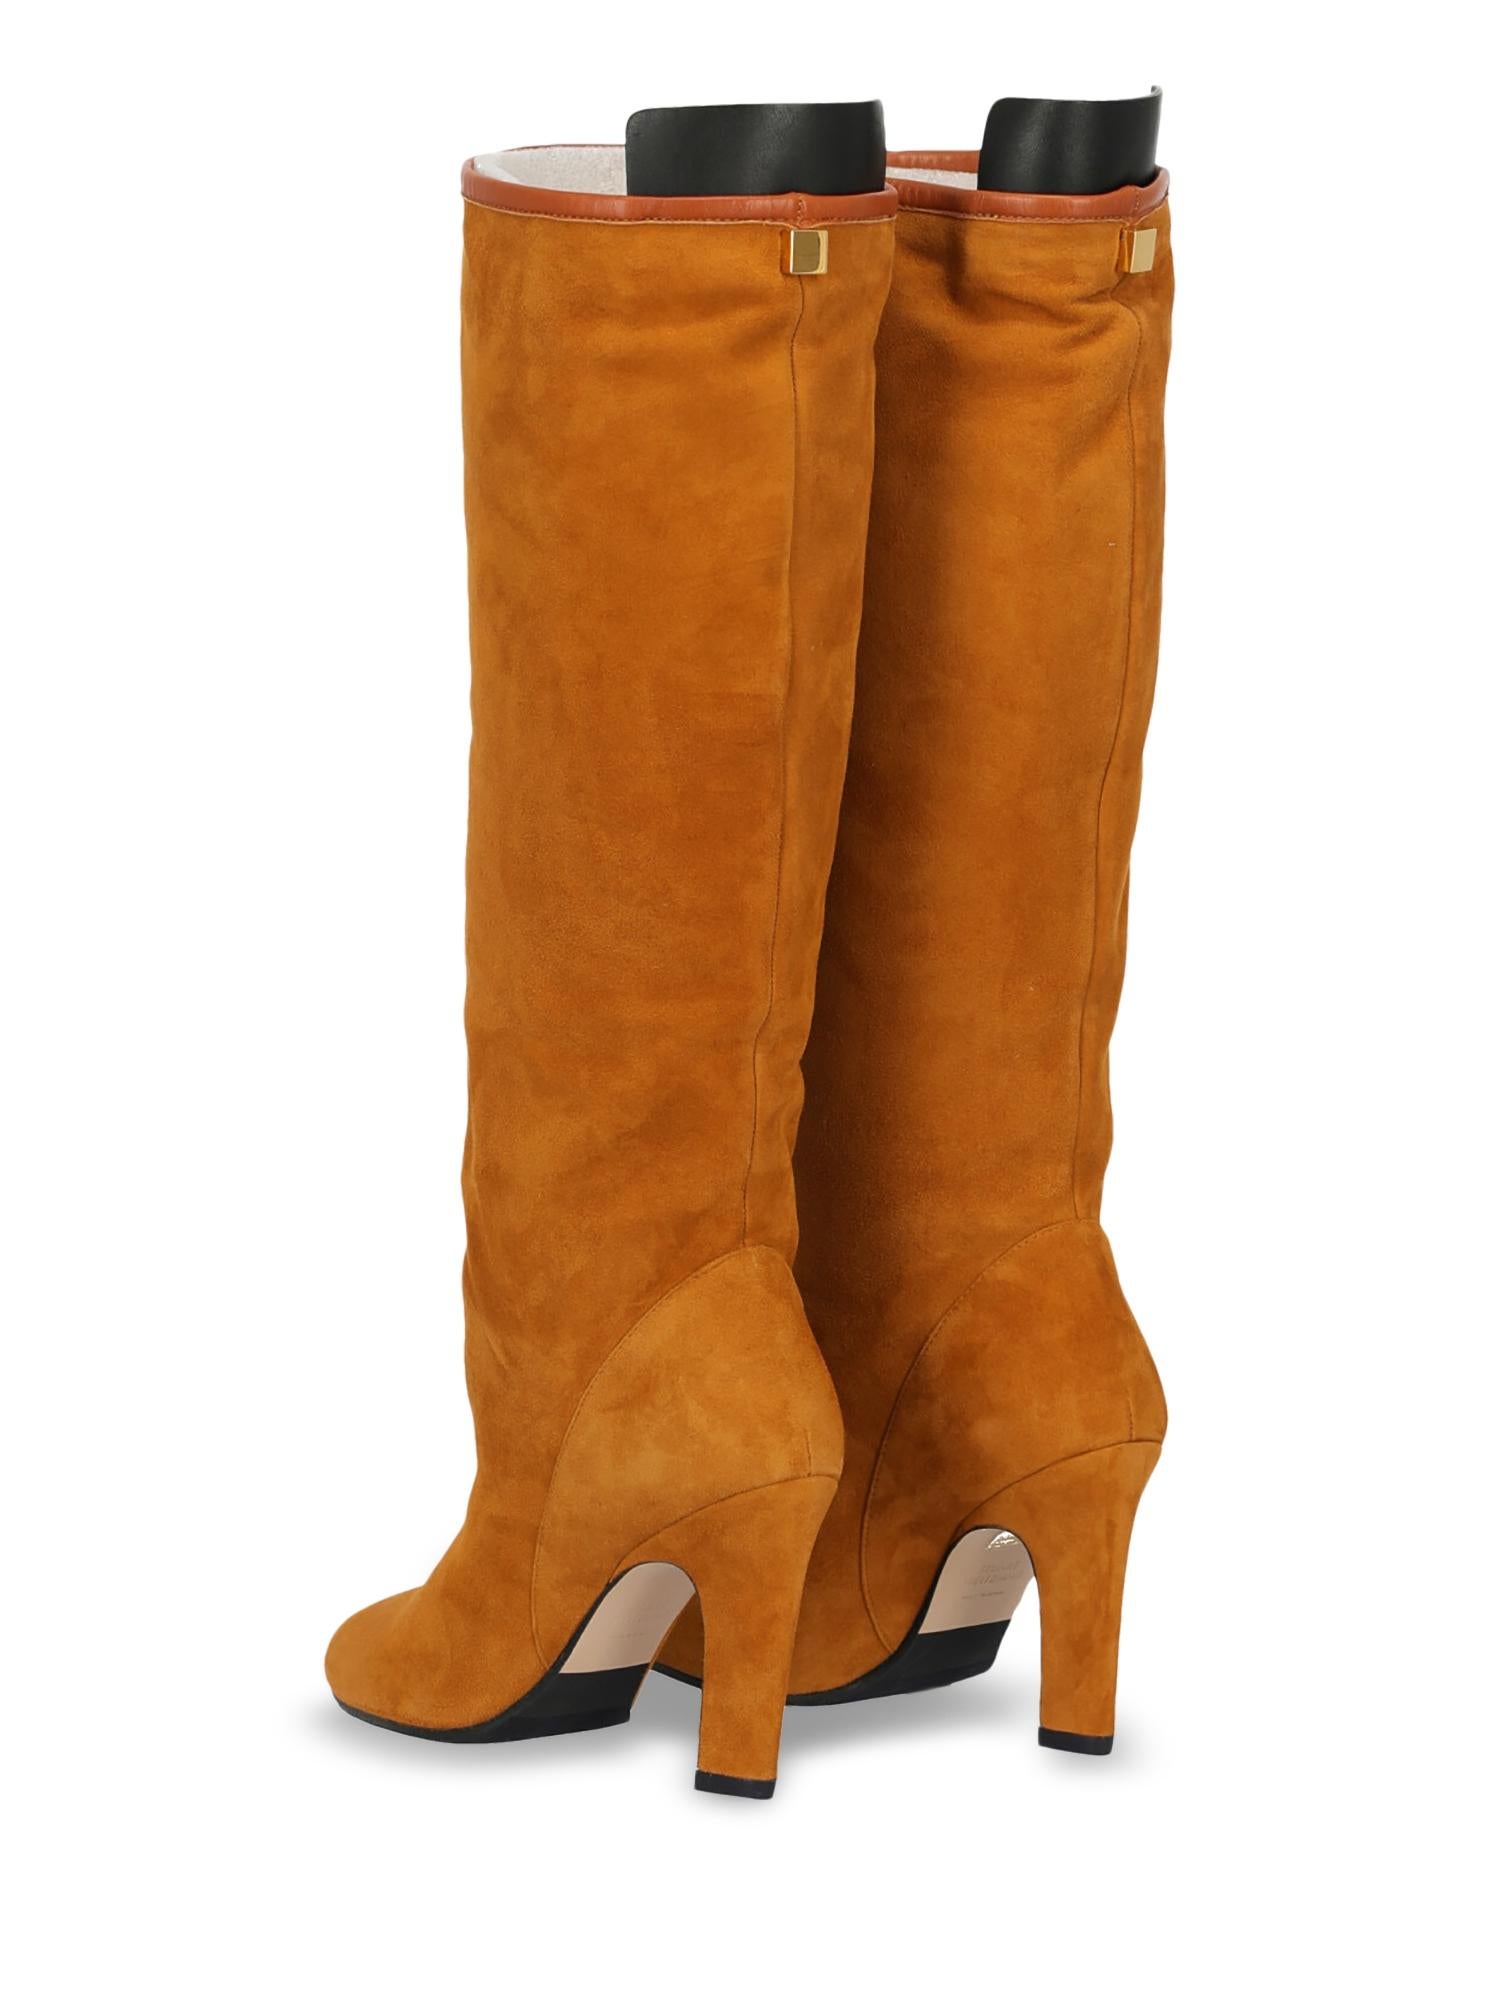 camel color boots